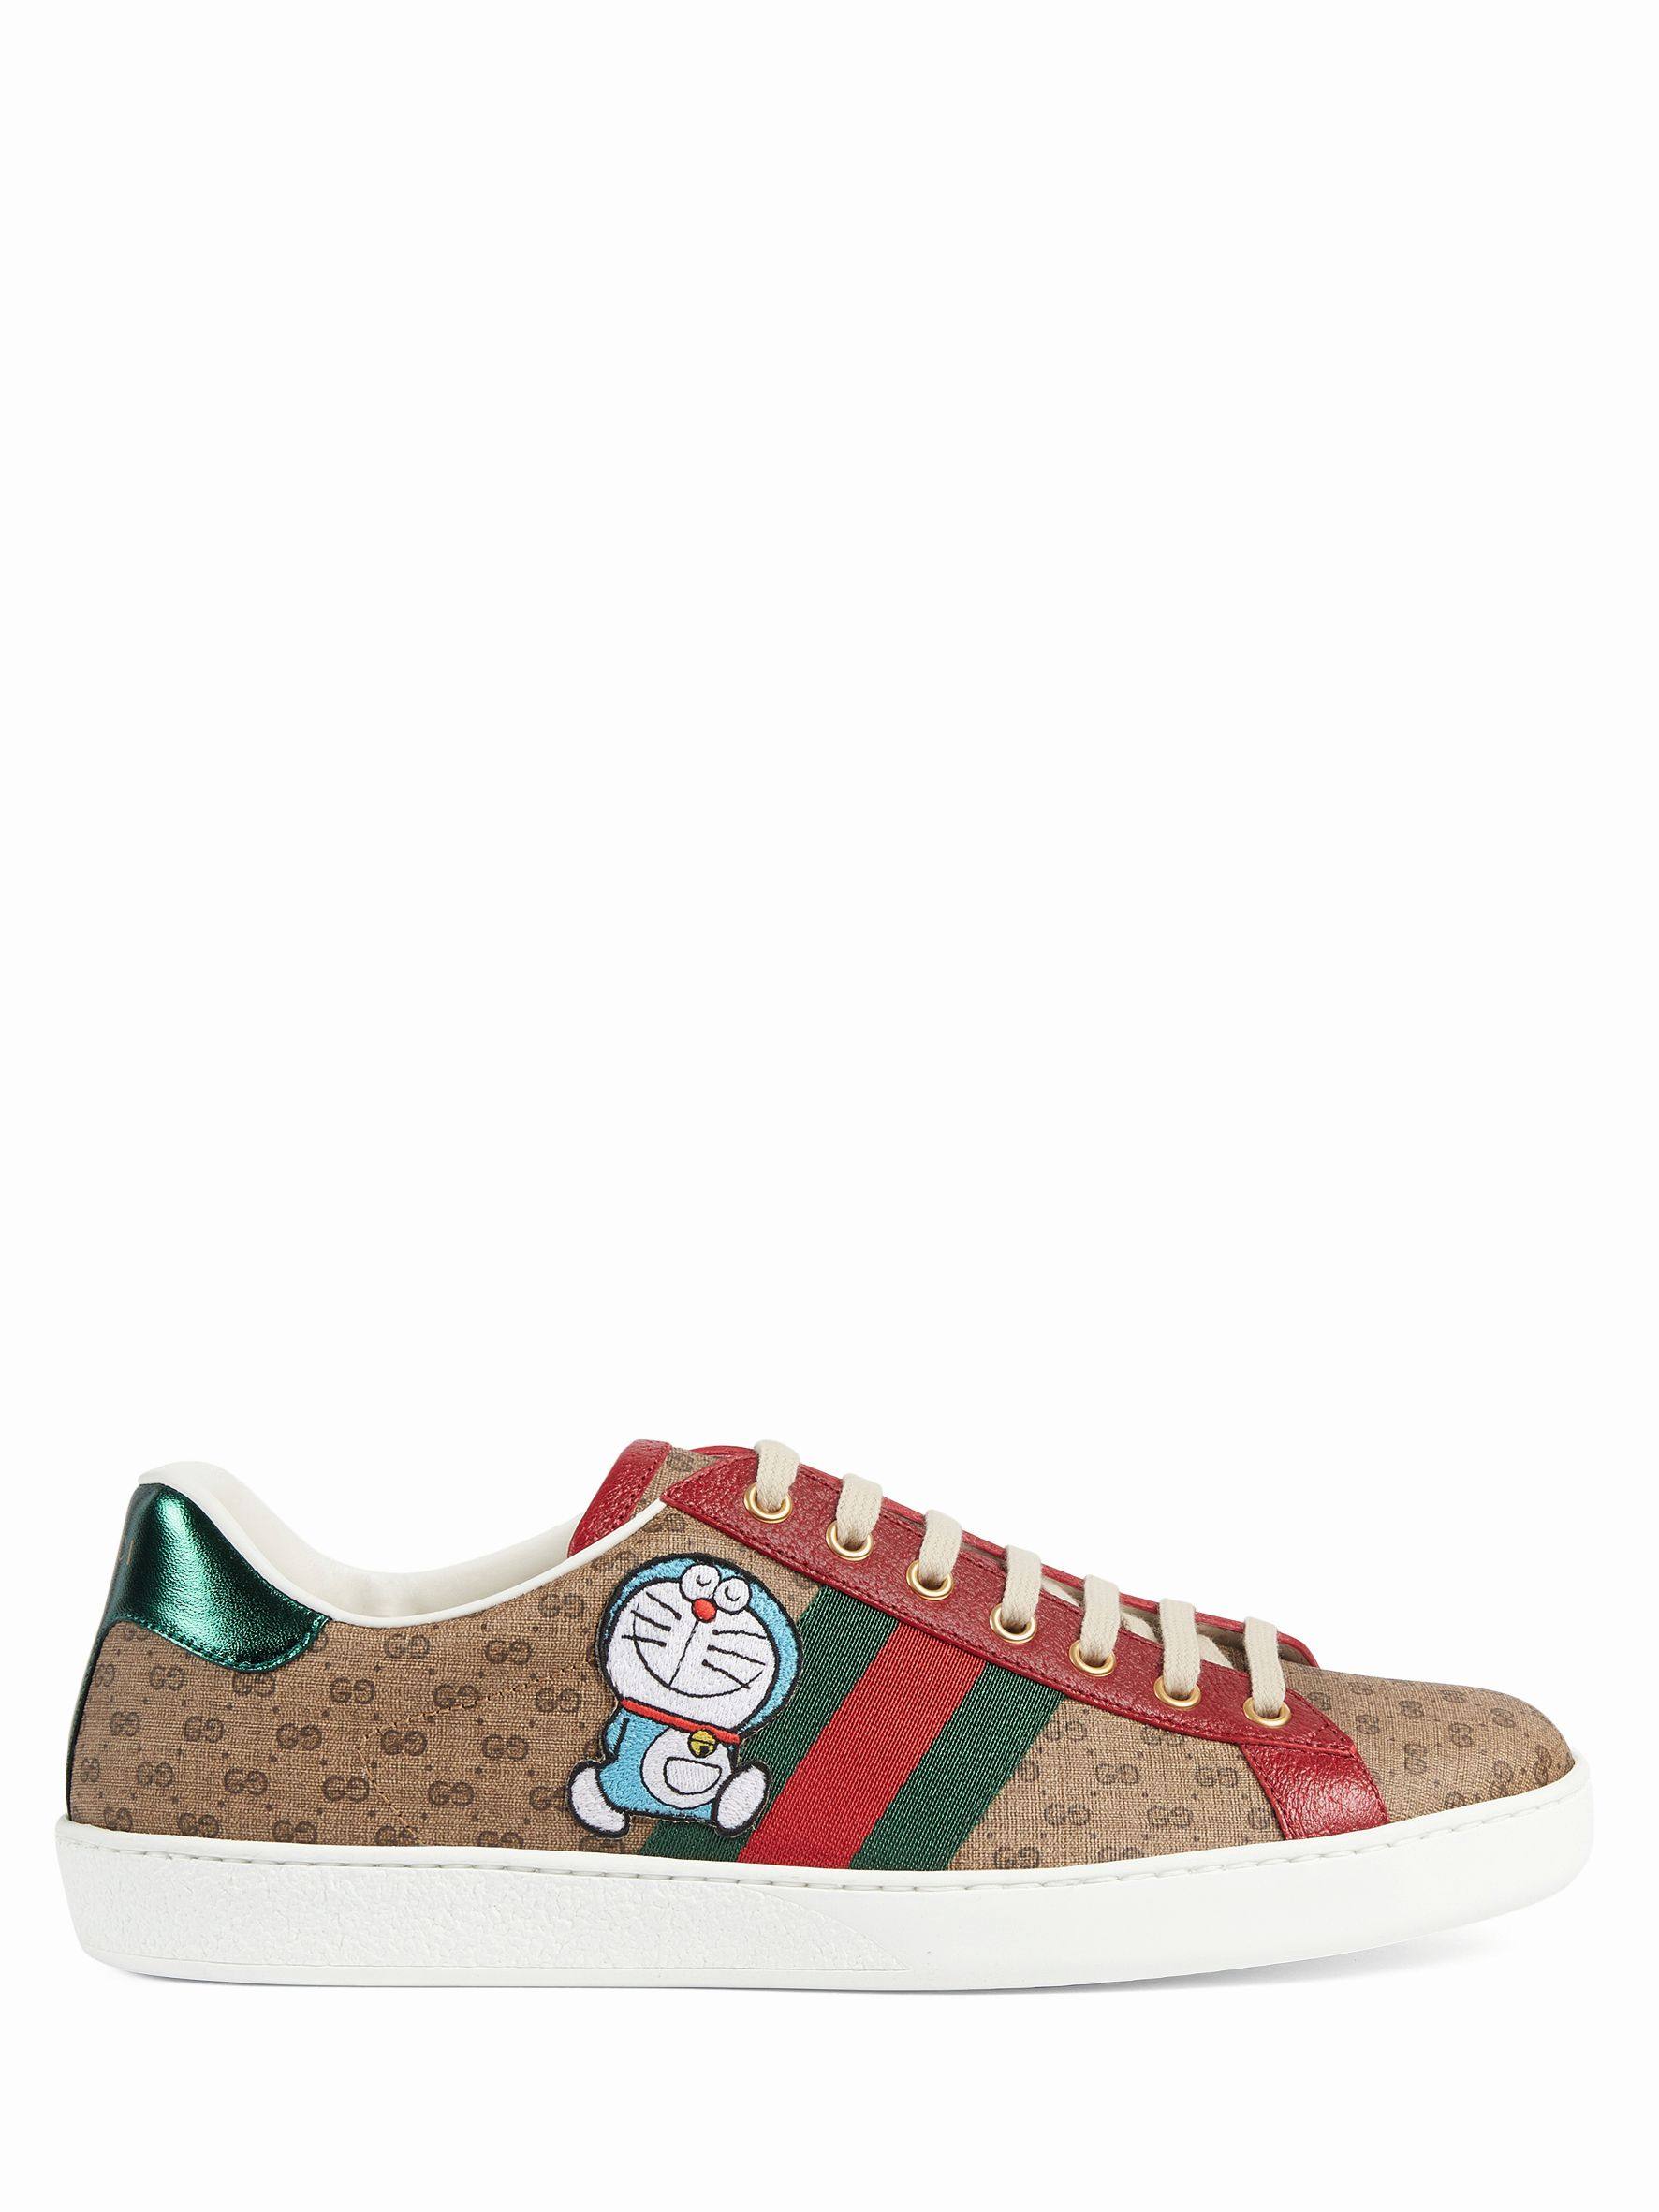 Gucci Brand Flowers Air Jordan 13 Sneaker Shoes